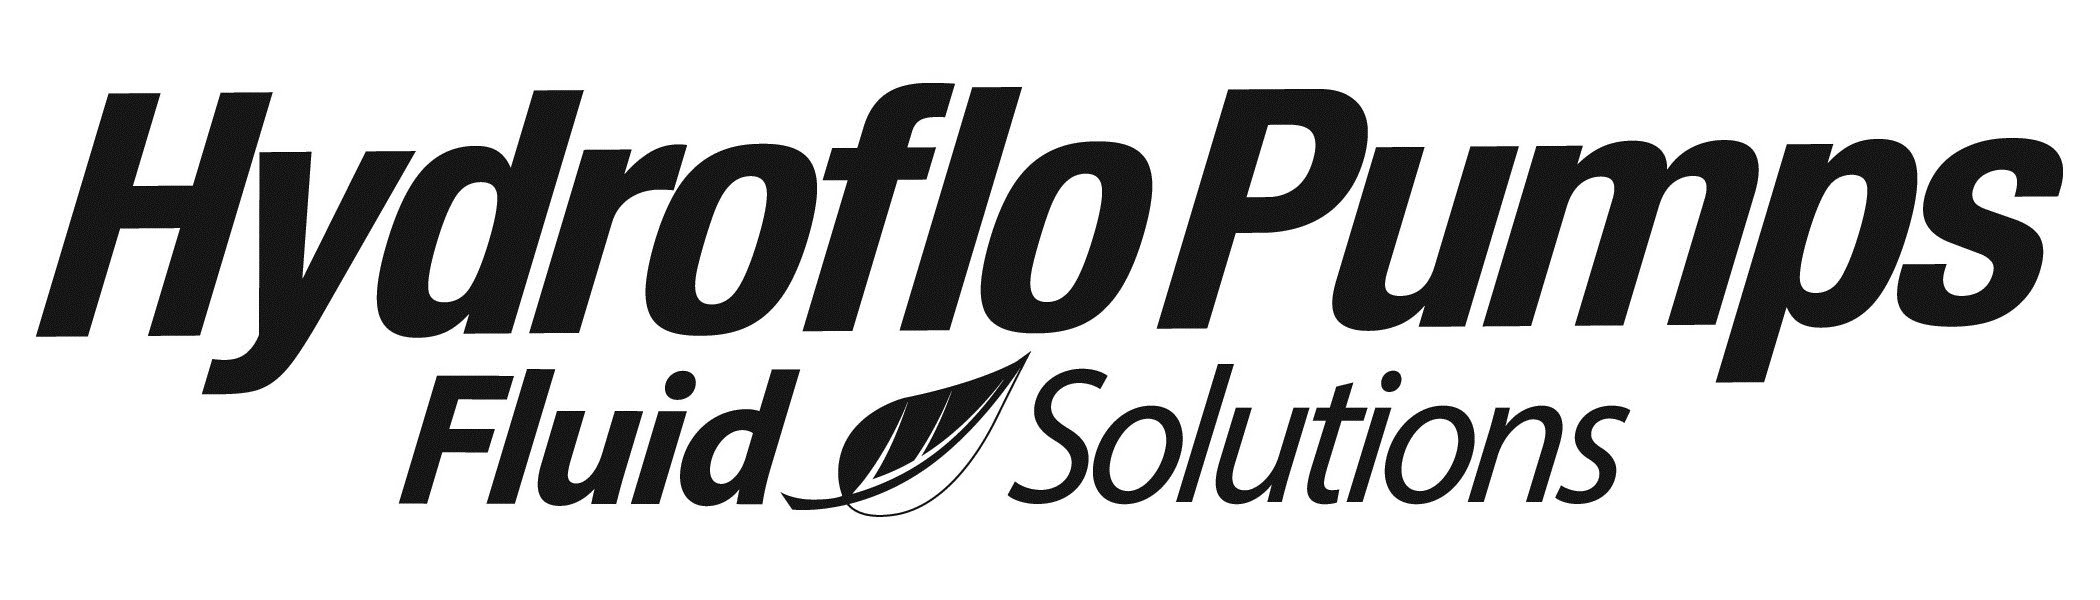 Trademark Logo HYDROFLO PUMPS FLUID SOLUTIONS